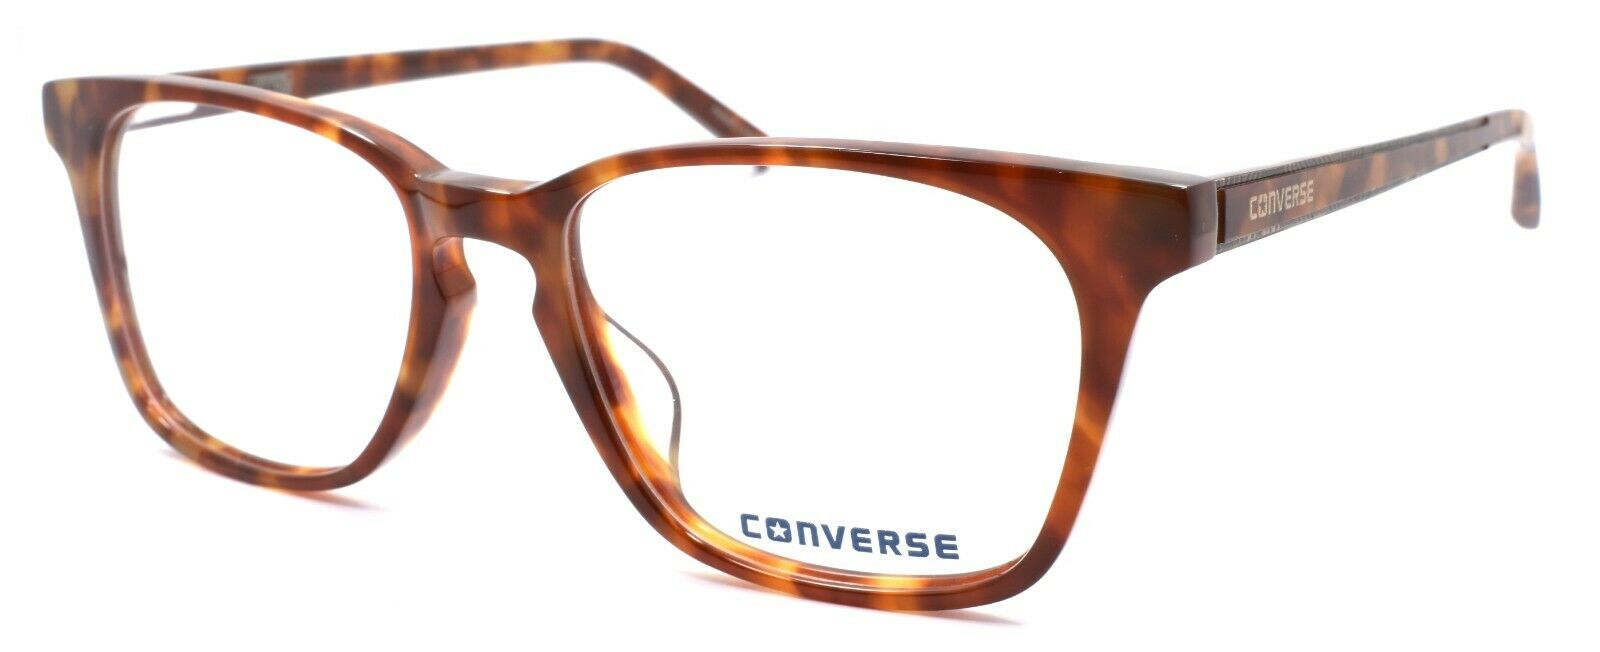 1-CONVERSE Q301 Men's Eyeglasses Frames 51-17-140 Brown Horn + CASE-751286294156-IKSpecs